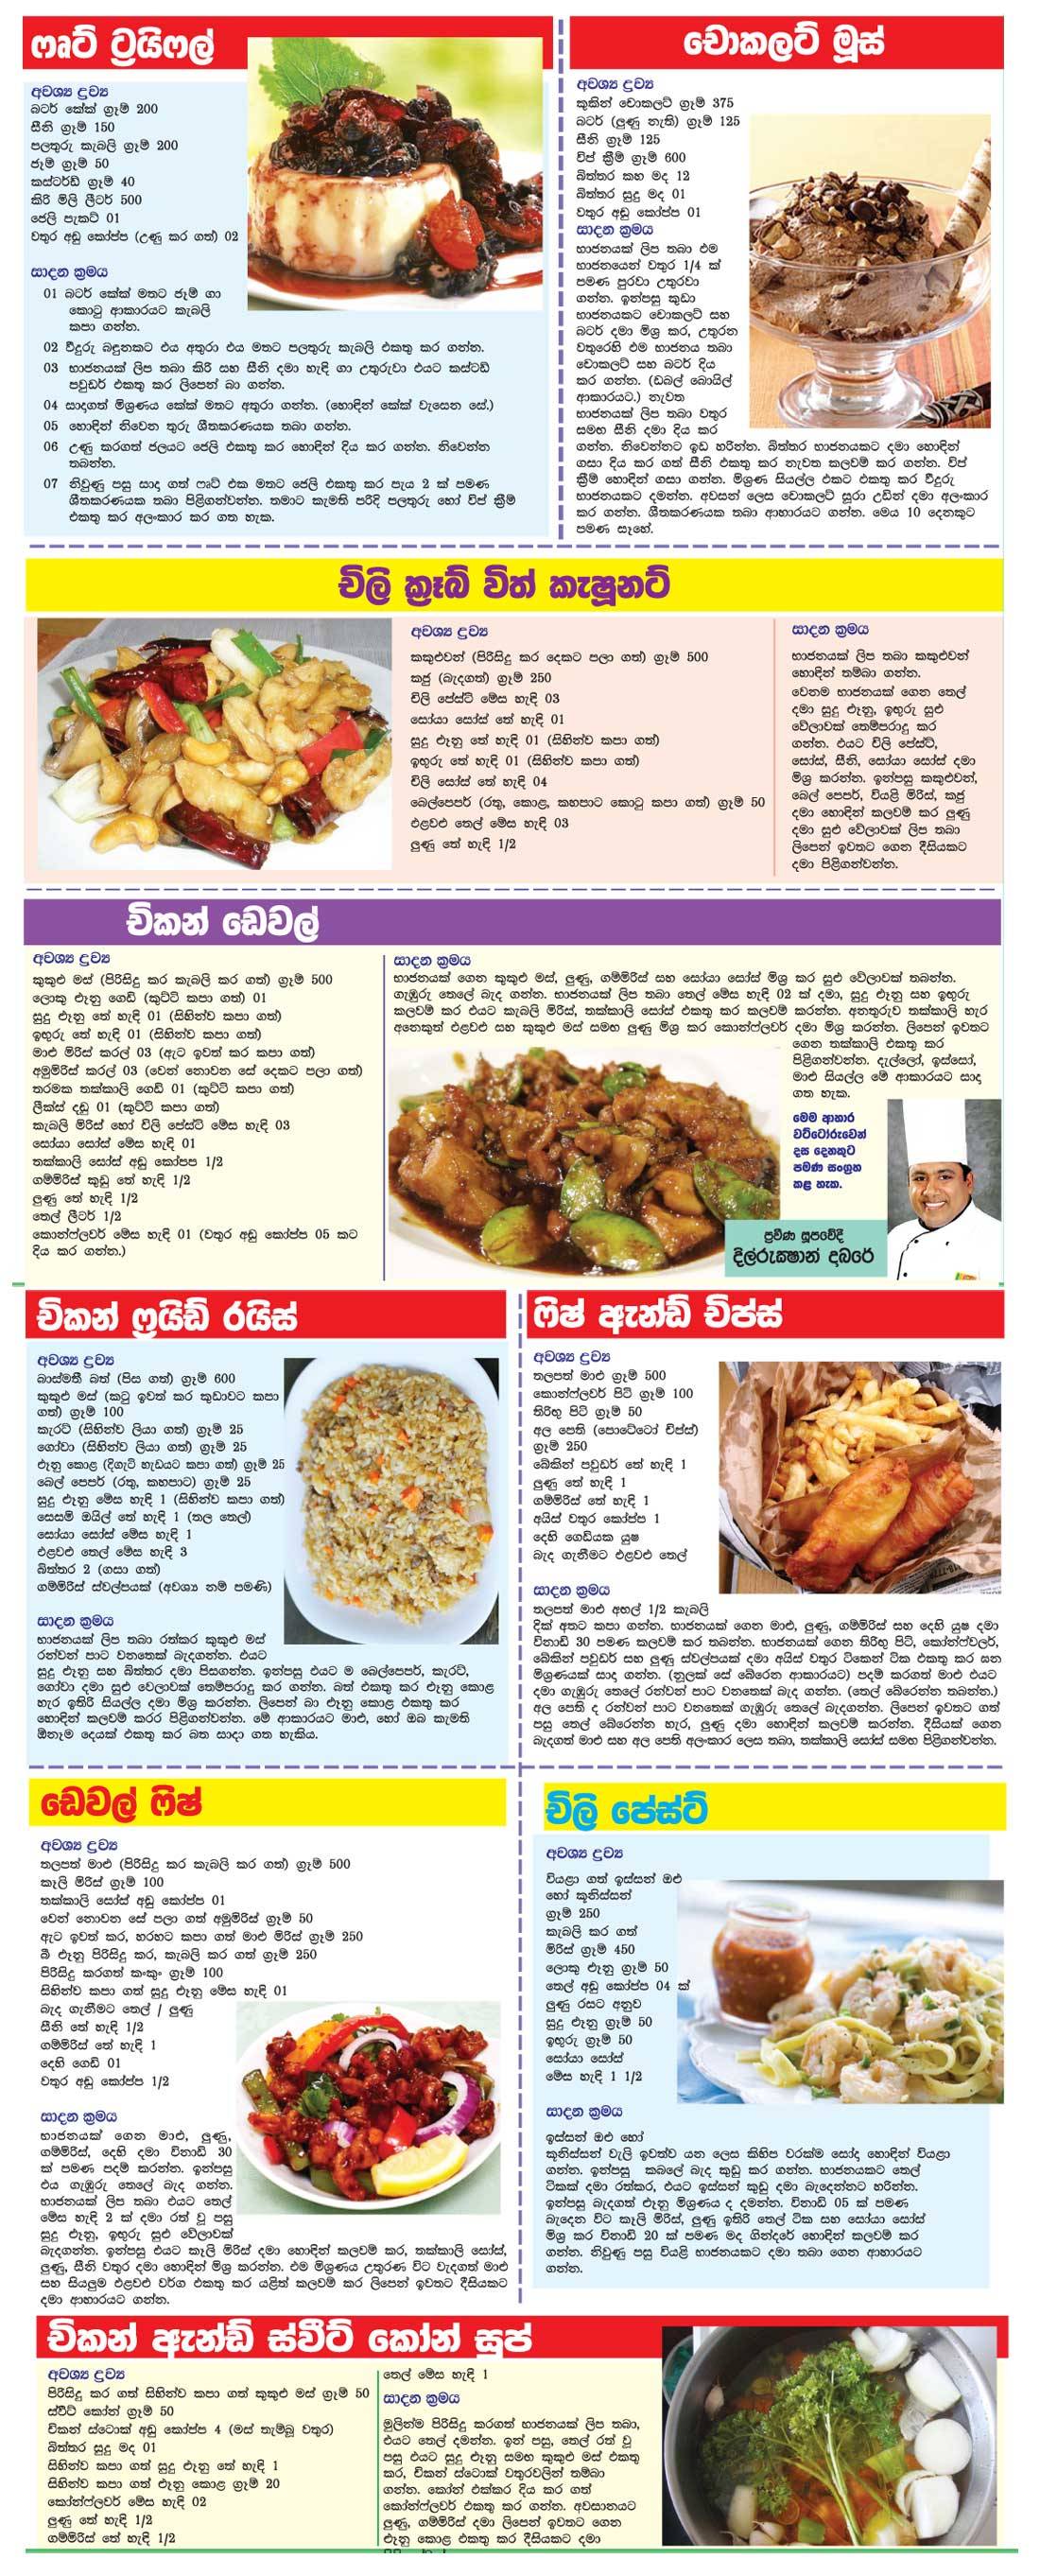 Wedding Cake Recipes Sinhala Wallpaper On Weddingcakeswallpapers - ไก่ ผัด เม็ด มะม่วง , HD Wallpaper & Backgrounds